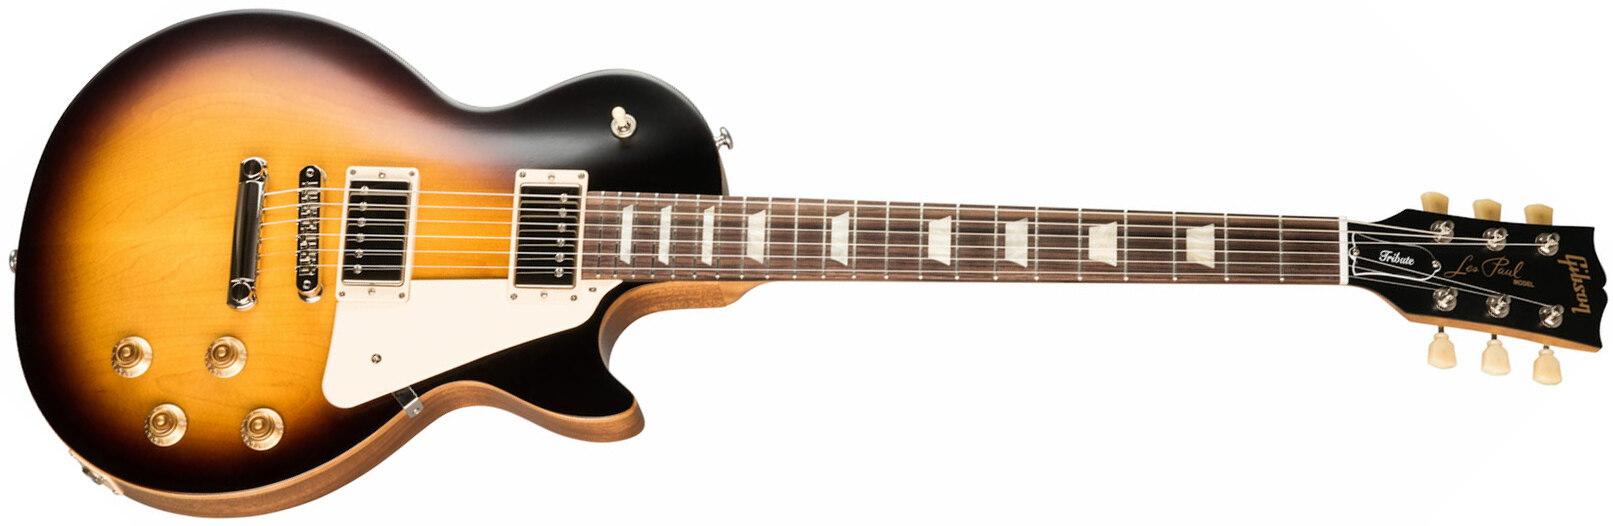 Gibson Les Paul Tribute Modern 2h Ht Rw - Satin Tobacco Burst - Single cut electric guitar - Main picture